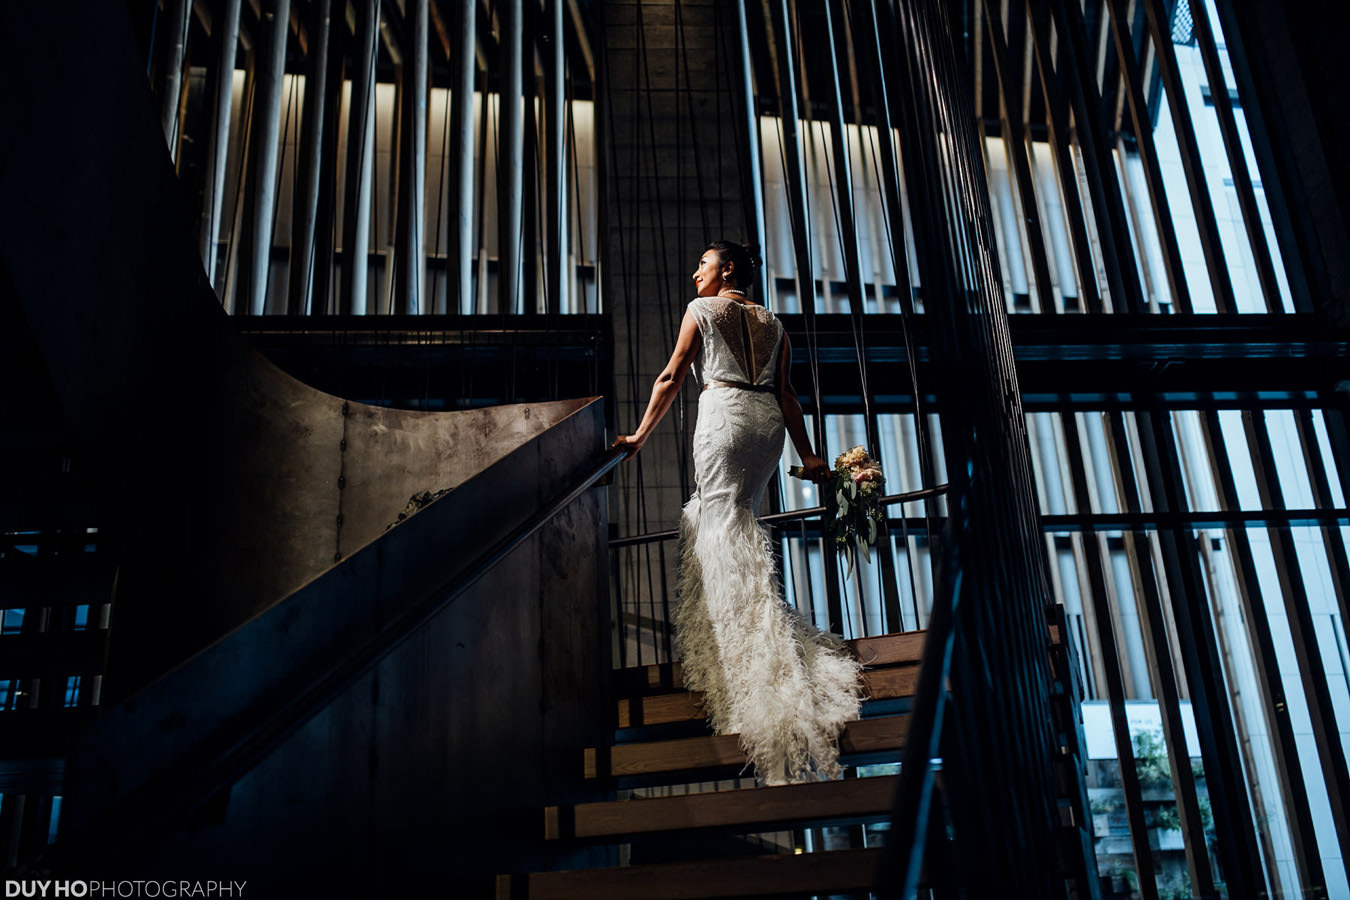 DUMBO Loft wedding photo | One Hotel Brookyln, New York | Duy Ho Photography